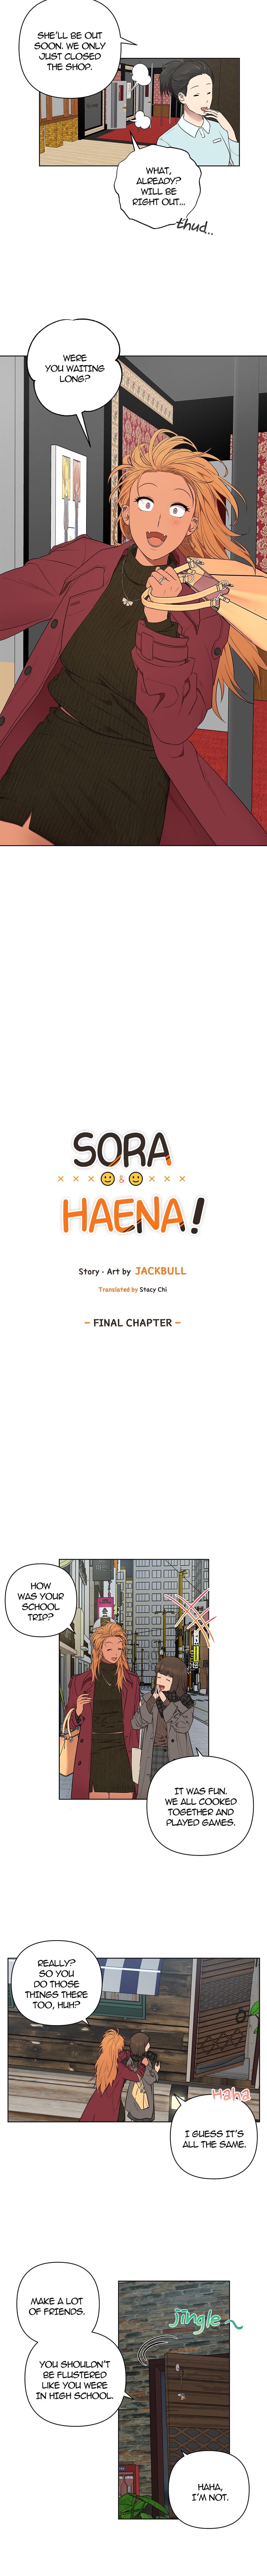 Sora & Haena! - Page 2